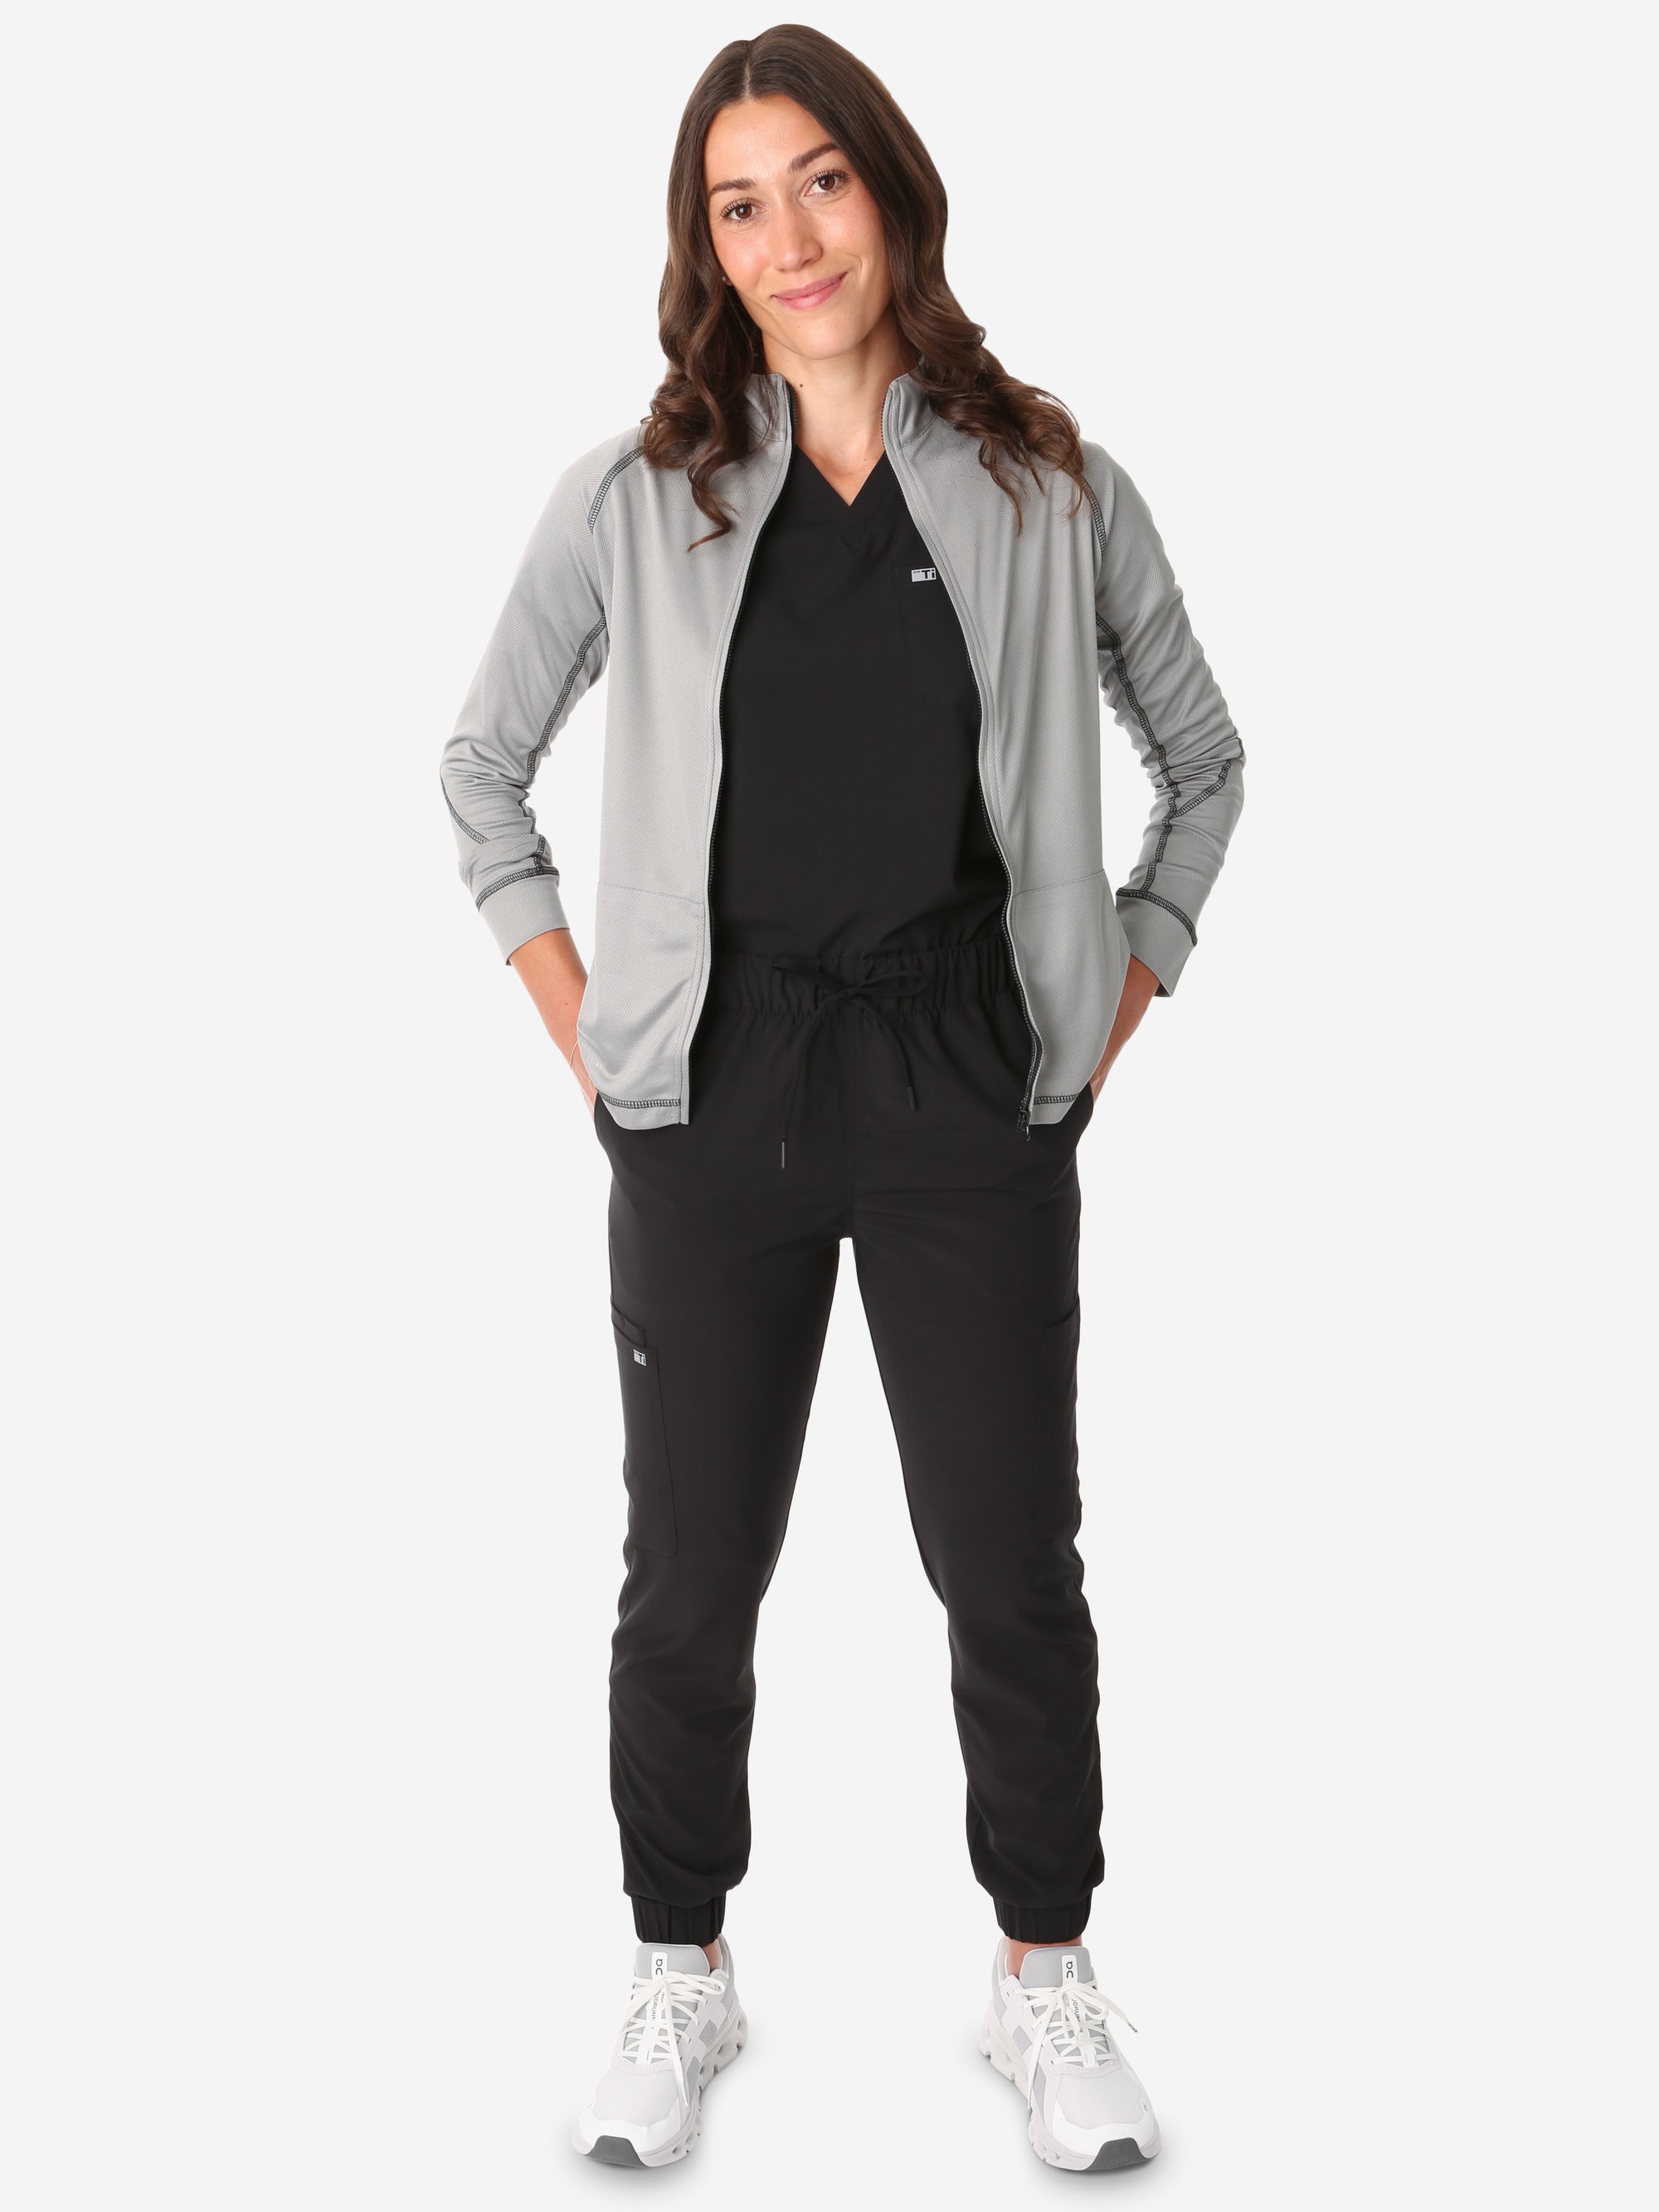 Women's Mesh Scrub Jacket Unzipped Titanium Gray Front View Full Body Plus Black Stretch Scrubs